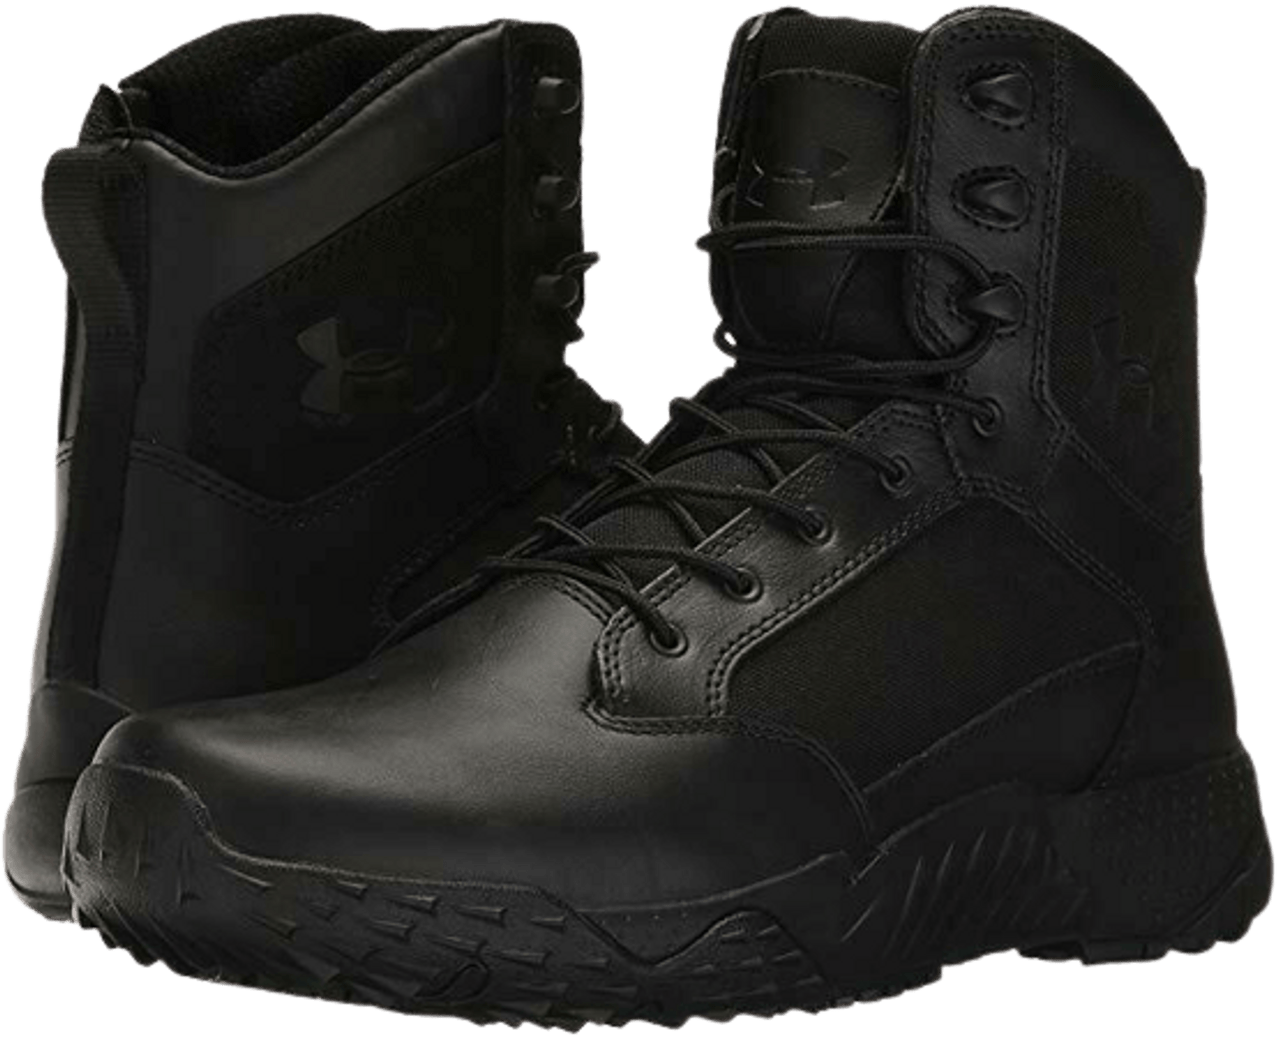 Under Armour Men's Black Steller Size Zip Boot